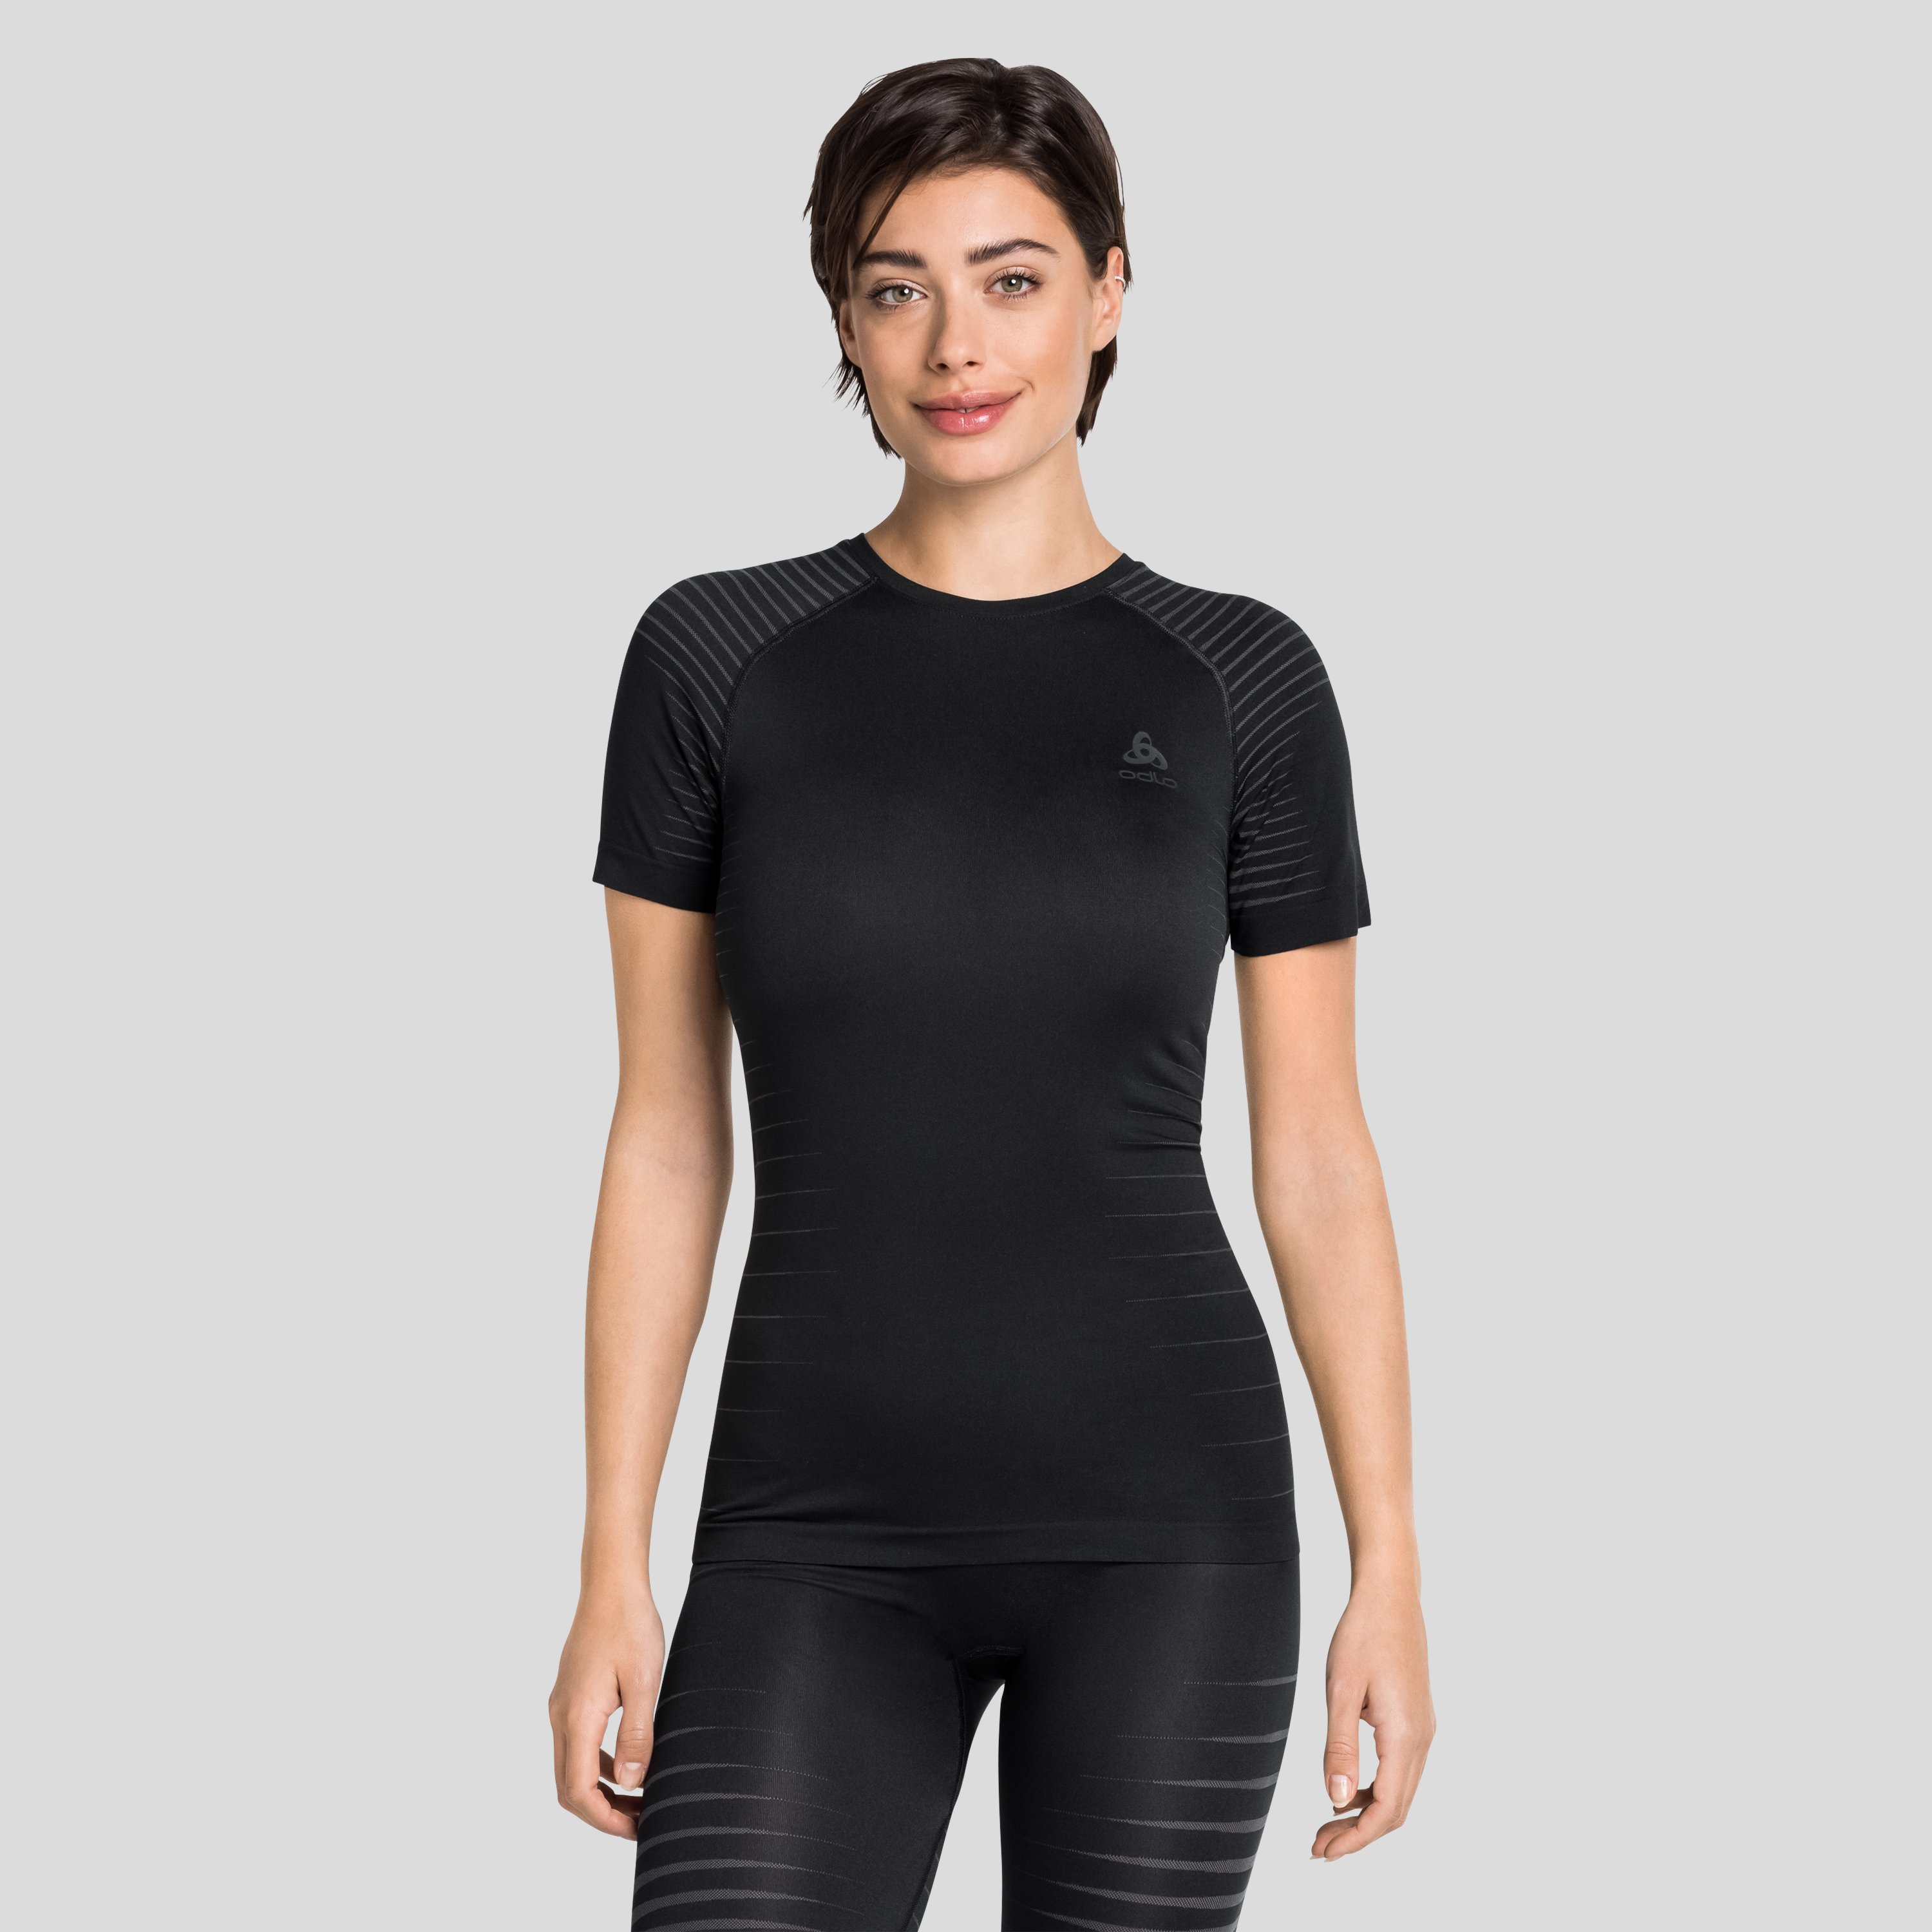 ODLO Performance Light Base Layer T-Shirt für Damen, M, schwarz